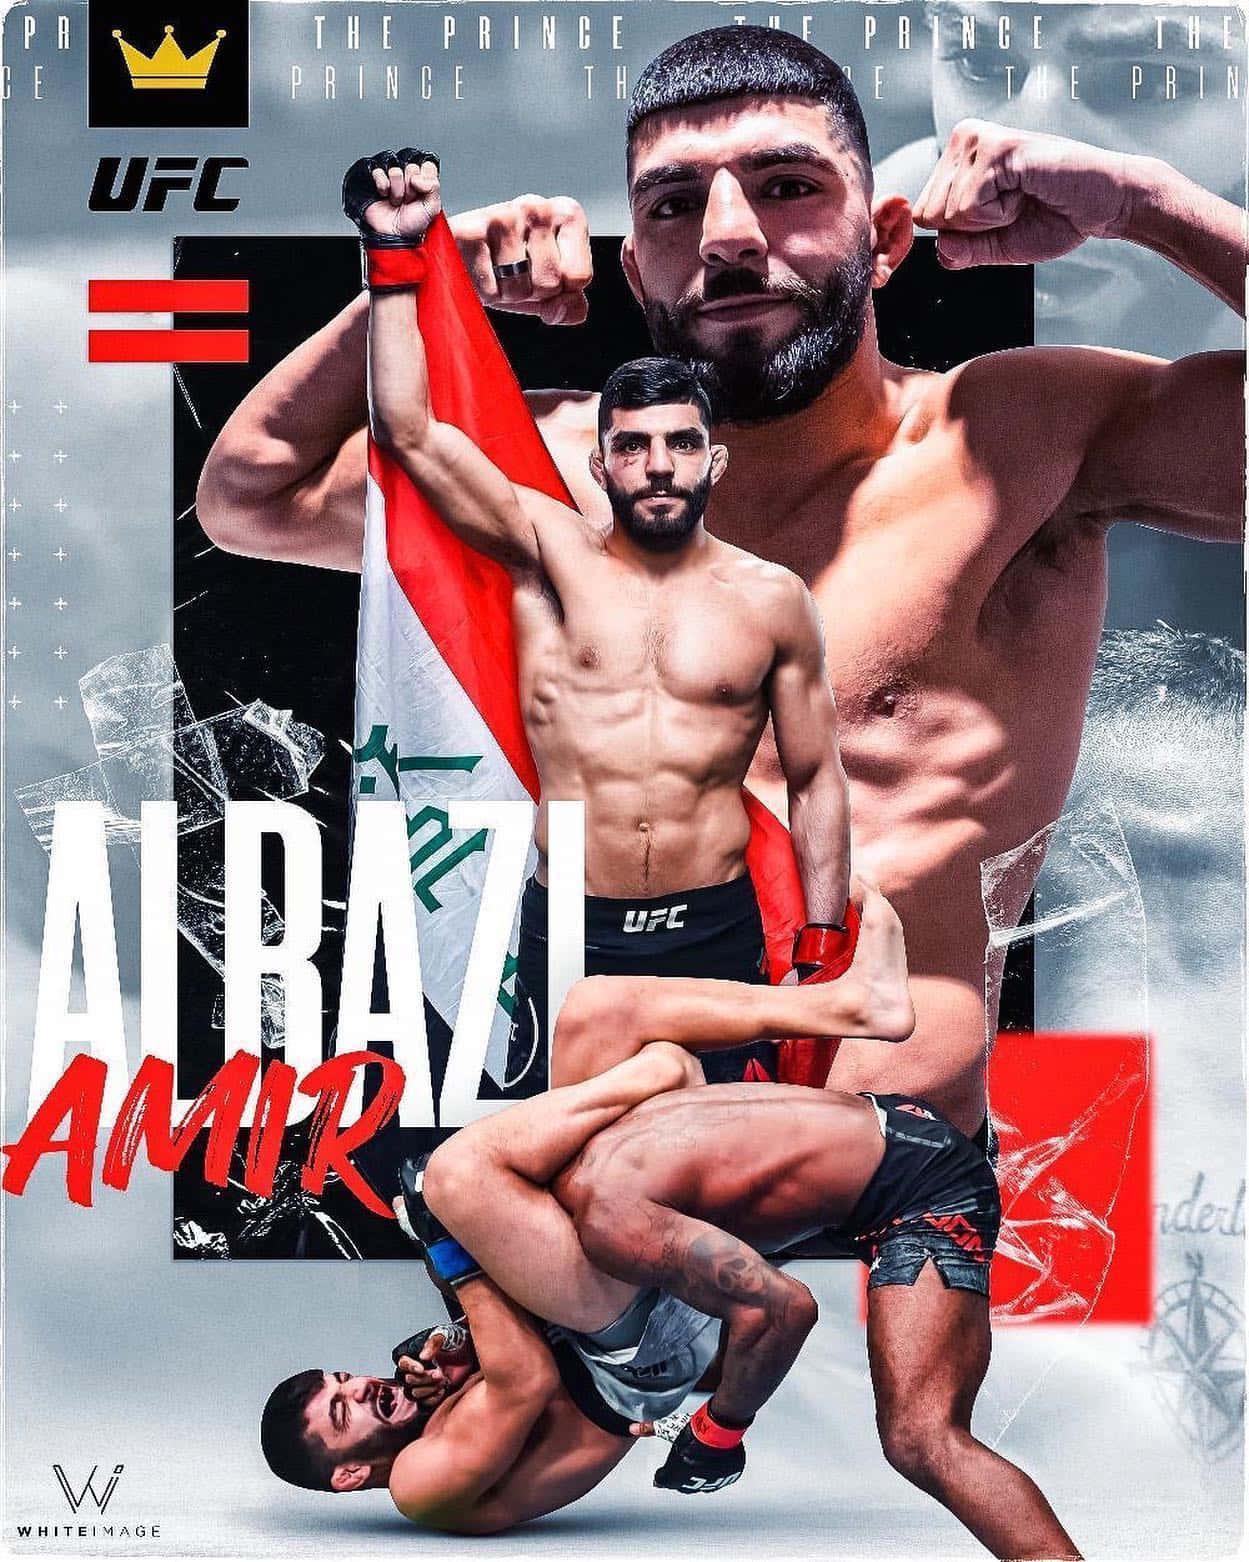 "UFC Fighter Amir Albazi Ready for His Next Match" Wallpaper